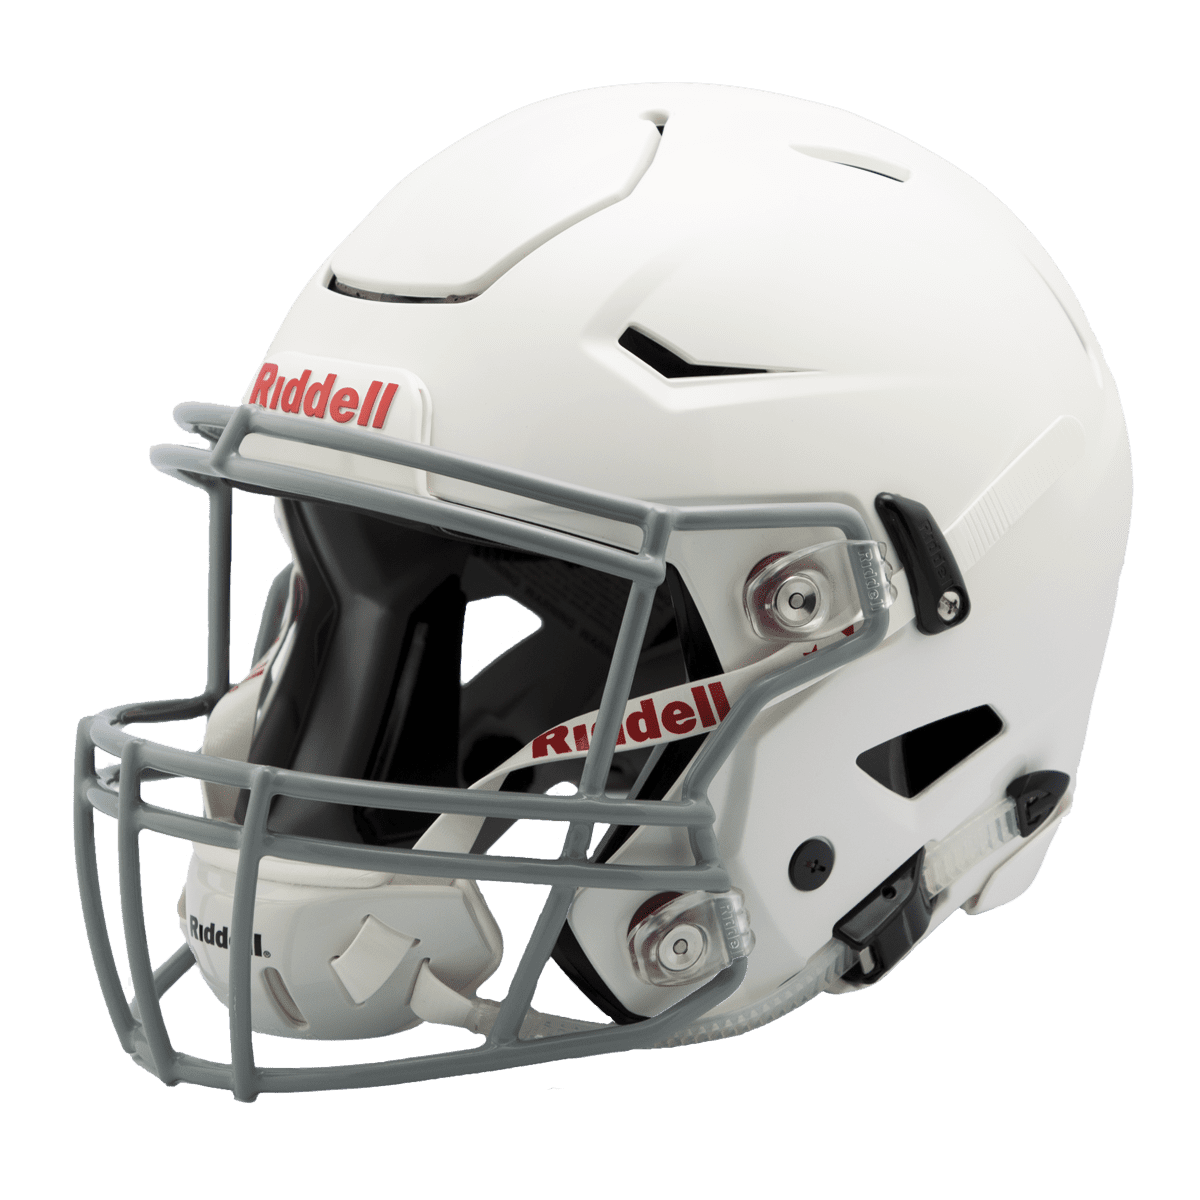 Riddell SpeedFlex Adult Football Helmet with Facemask